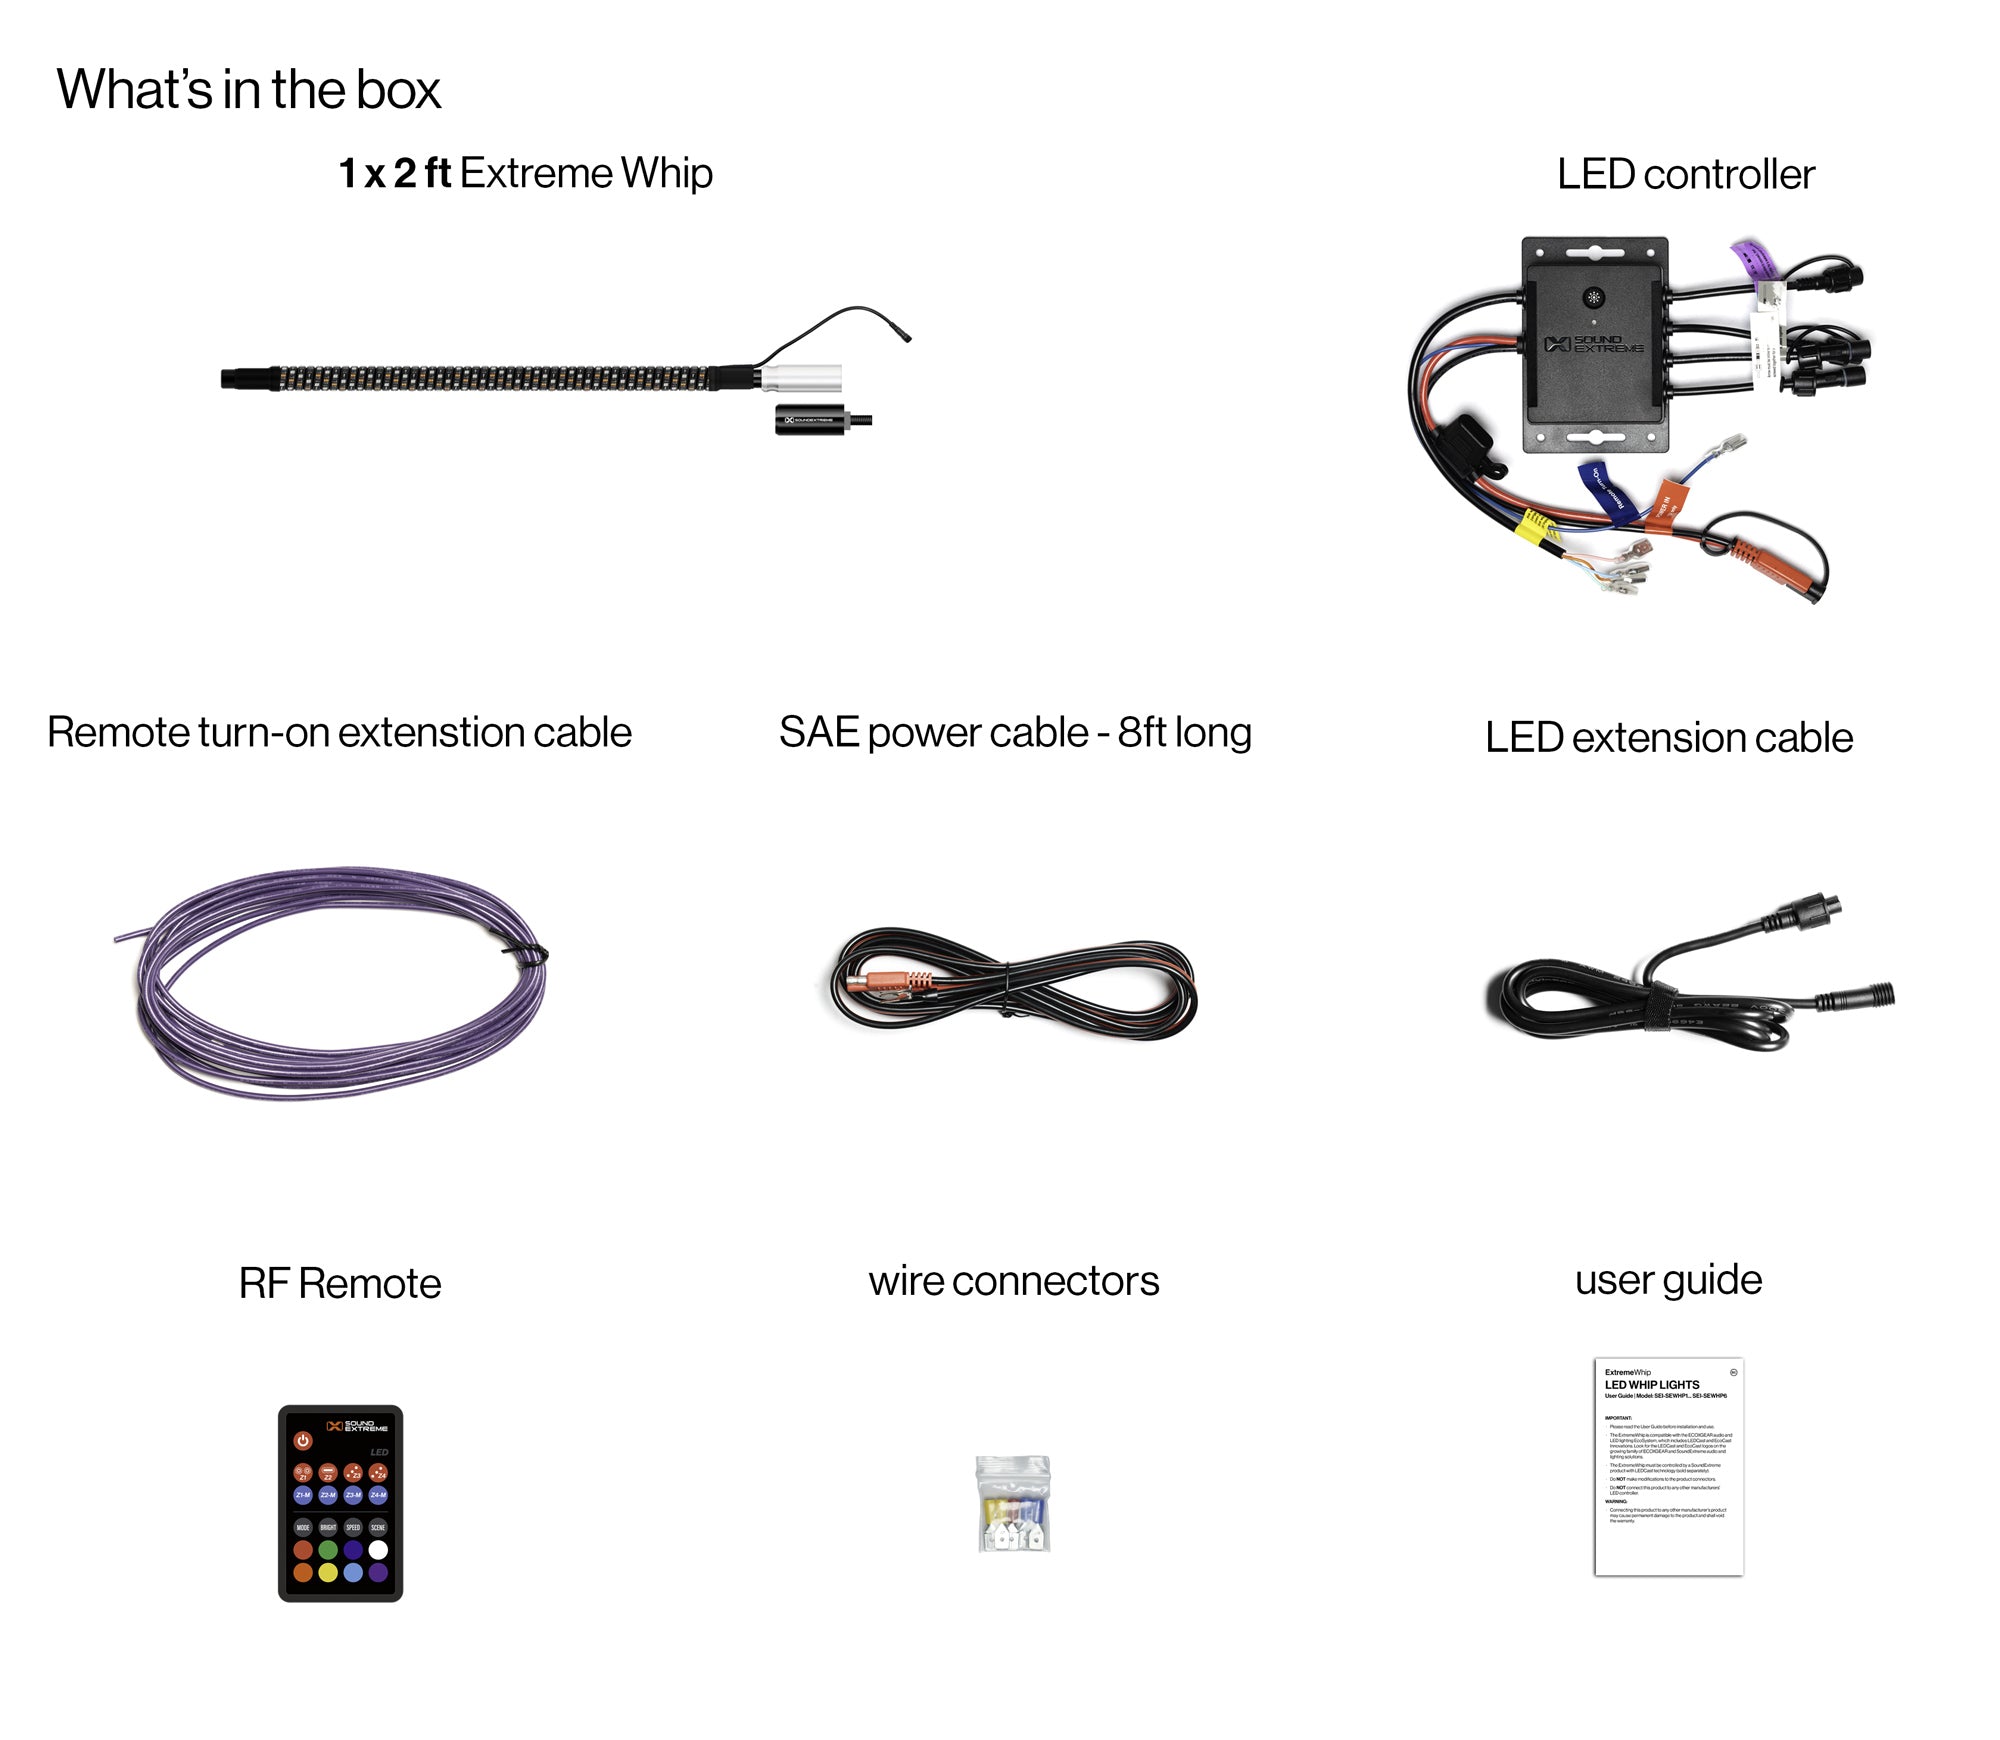 Extreme Whip Kit  Qty 1 x 2Ft plus LEDCast Controller - SoundExtreme